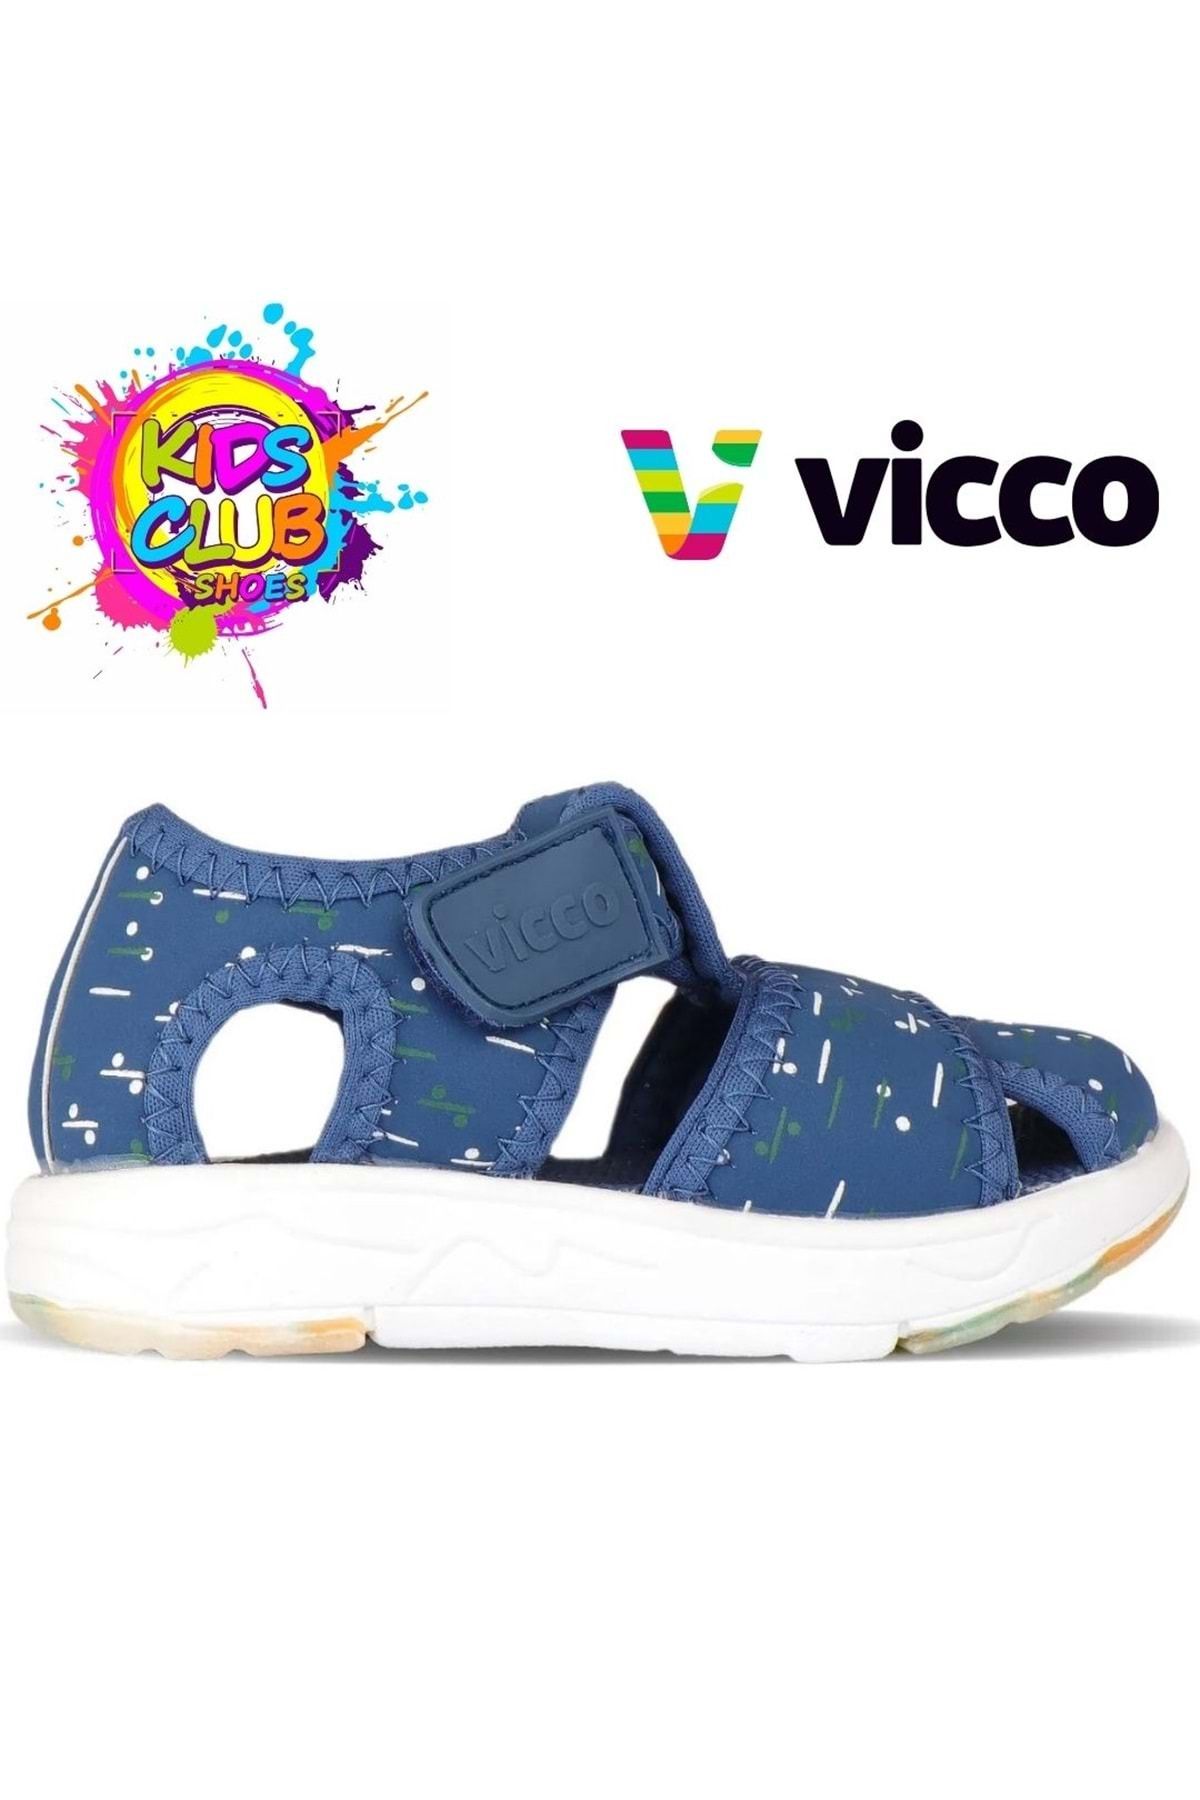 Kids Club Shoes Vicco Bumba III Ortopedik Çocuk Sandalet LACİVERT